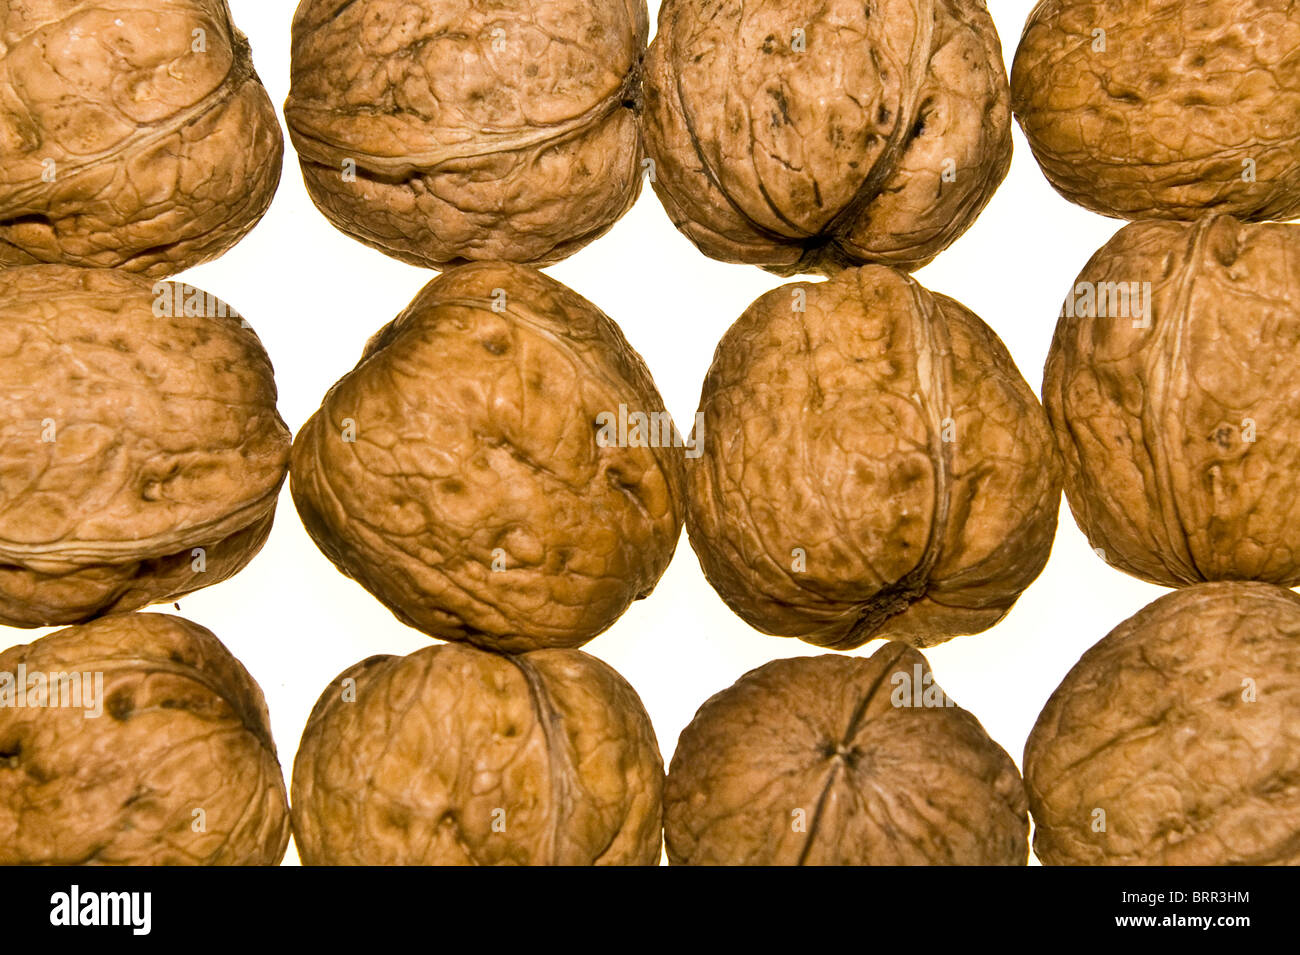 Close-up studio shot of walnuts Stock Photo